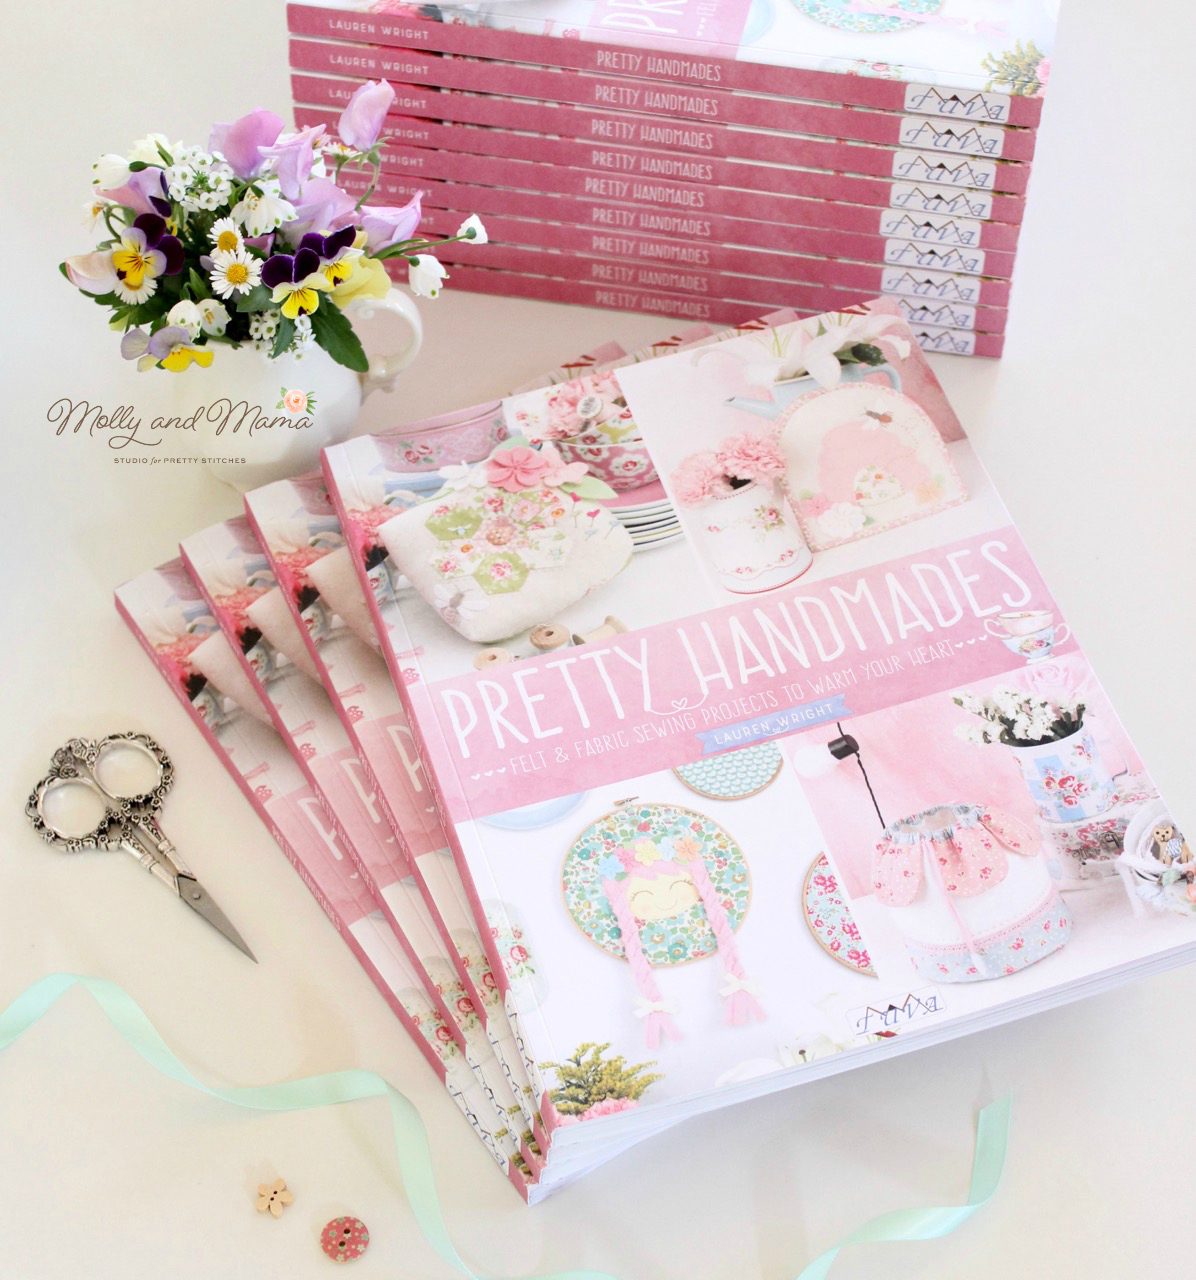 Welcome to the Pretty Handmades Book Showcase